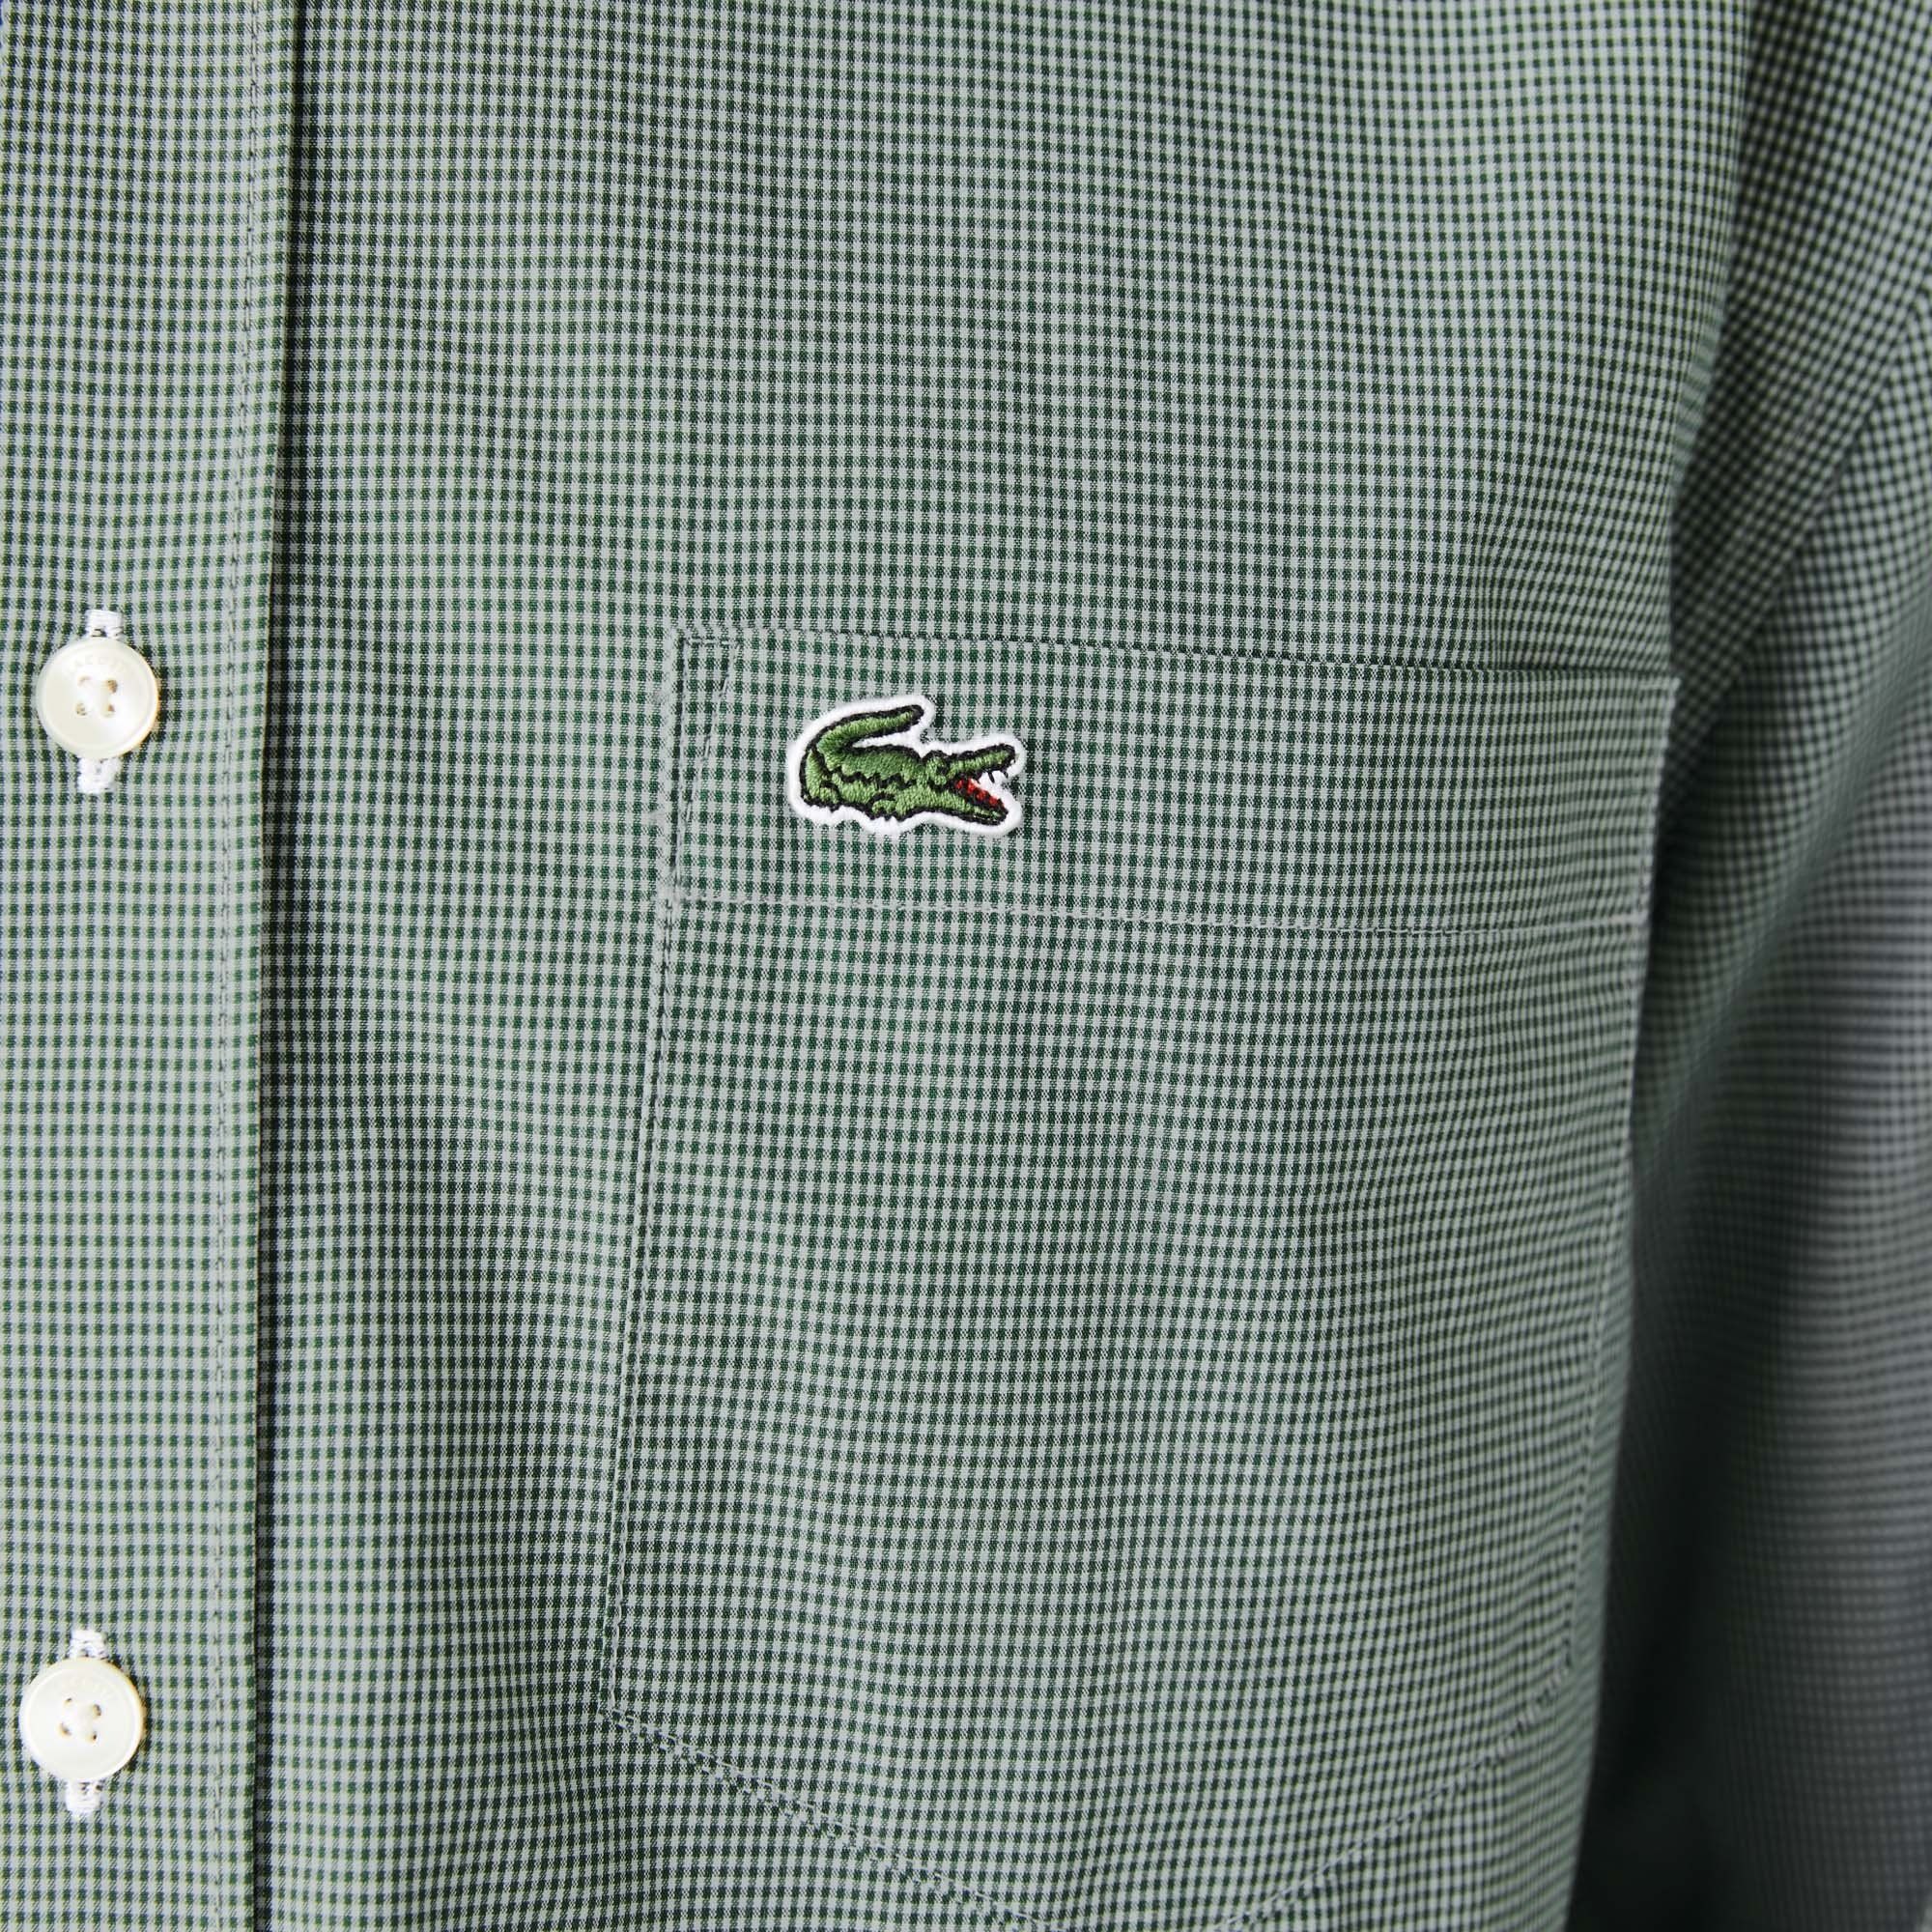  Lacoste Regular Fit Gingham Cotton Poplin Shirt - Green 